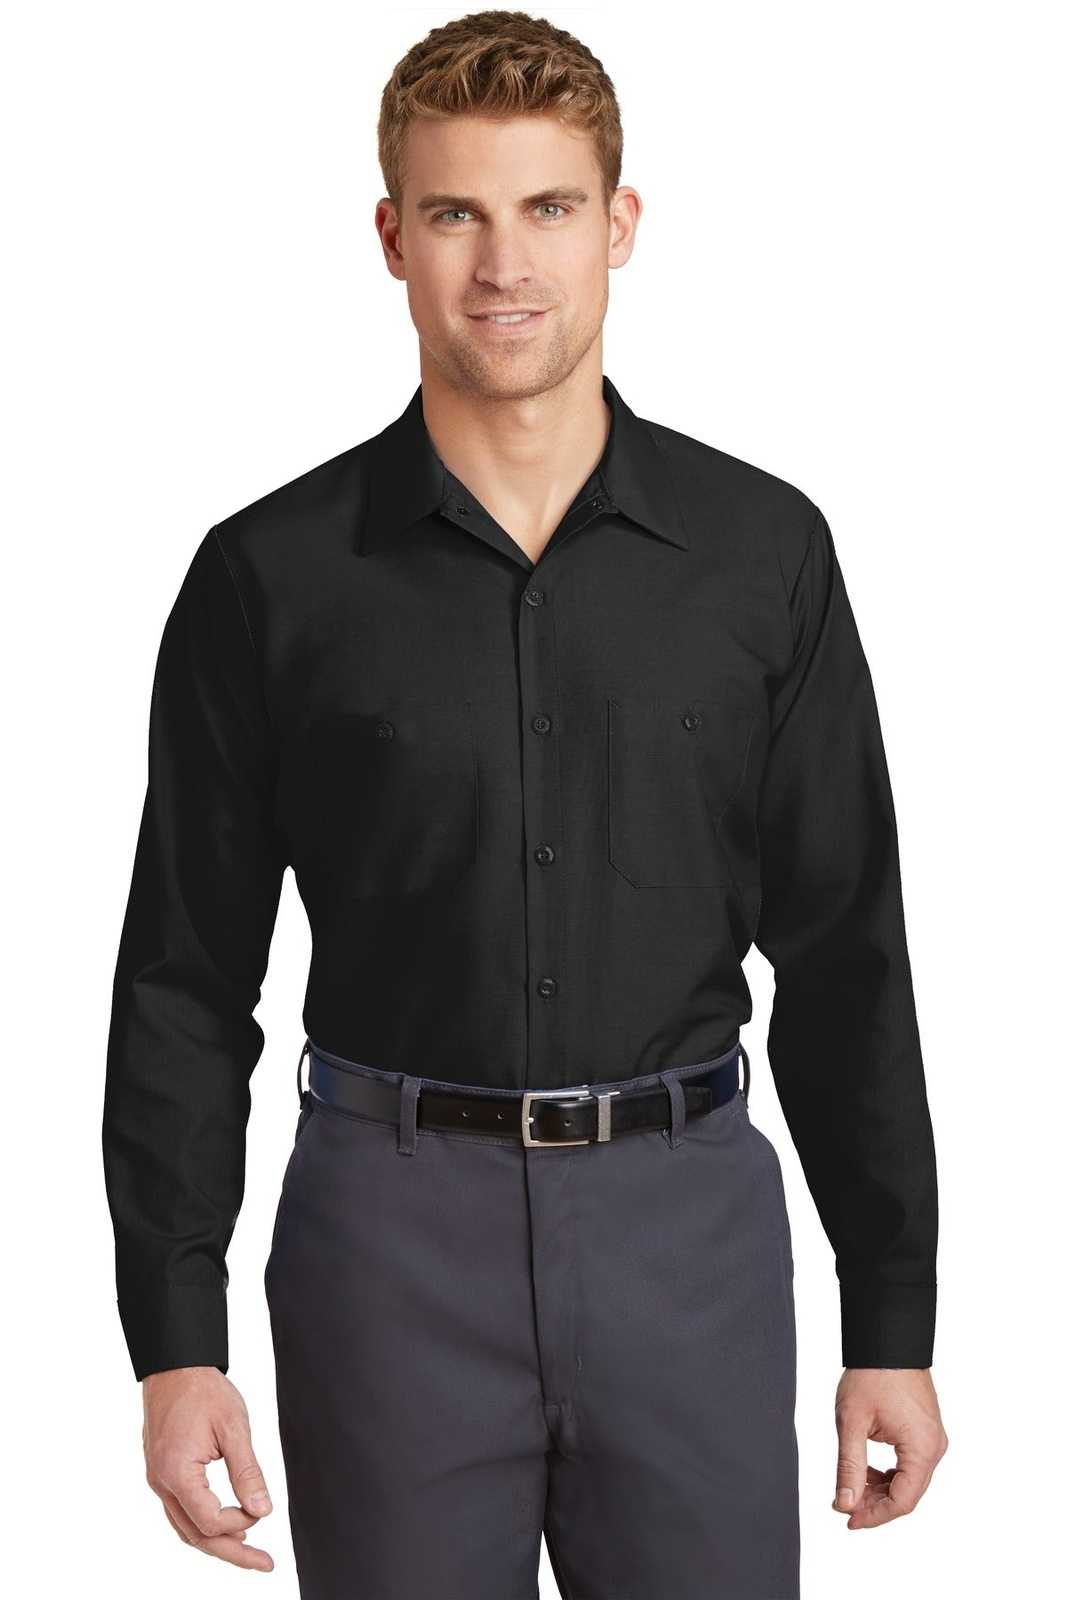 Red Kap SP14 Long Sleeve Industrial Work Shirt - Black - HIT a Double - 1